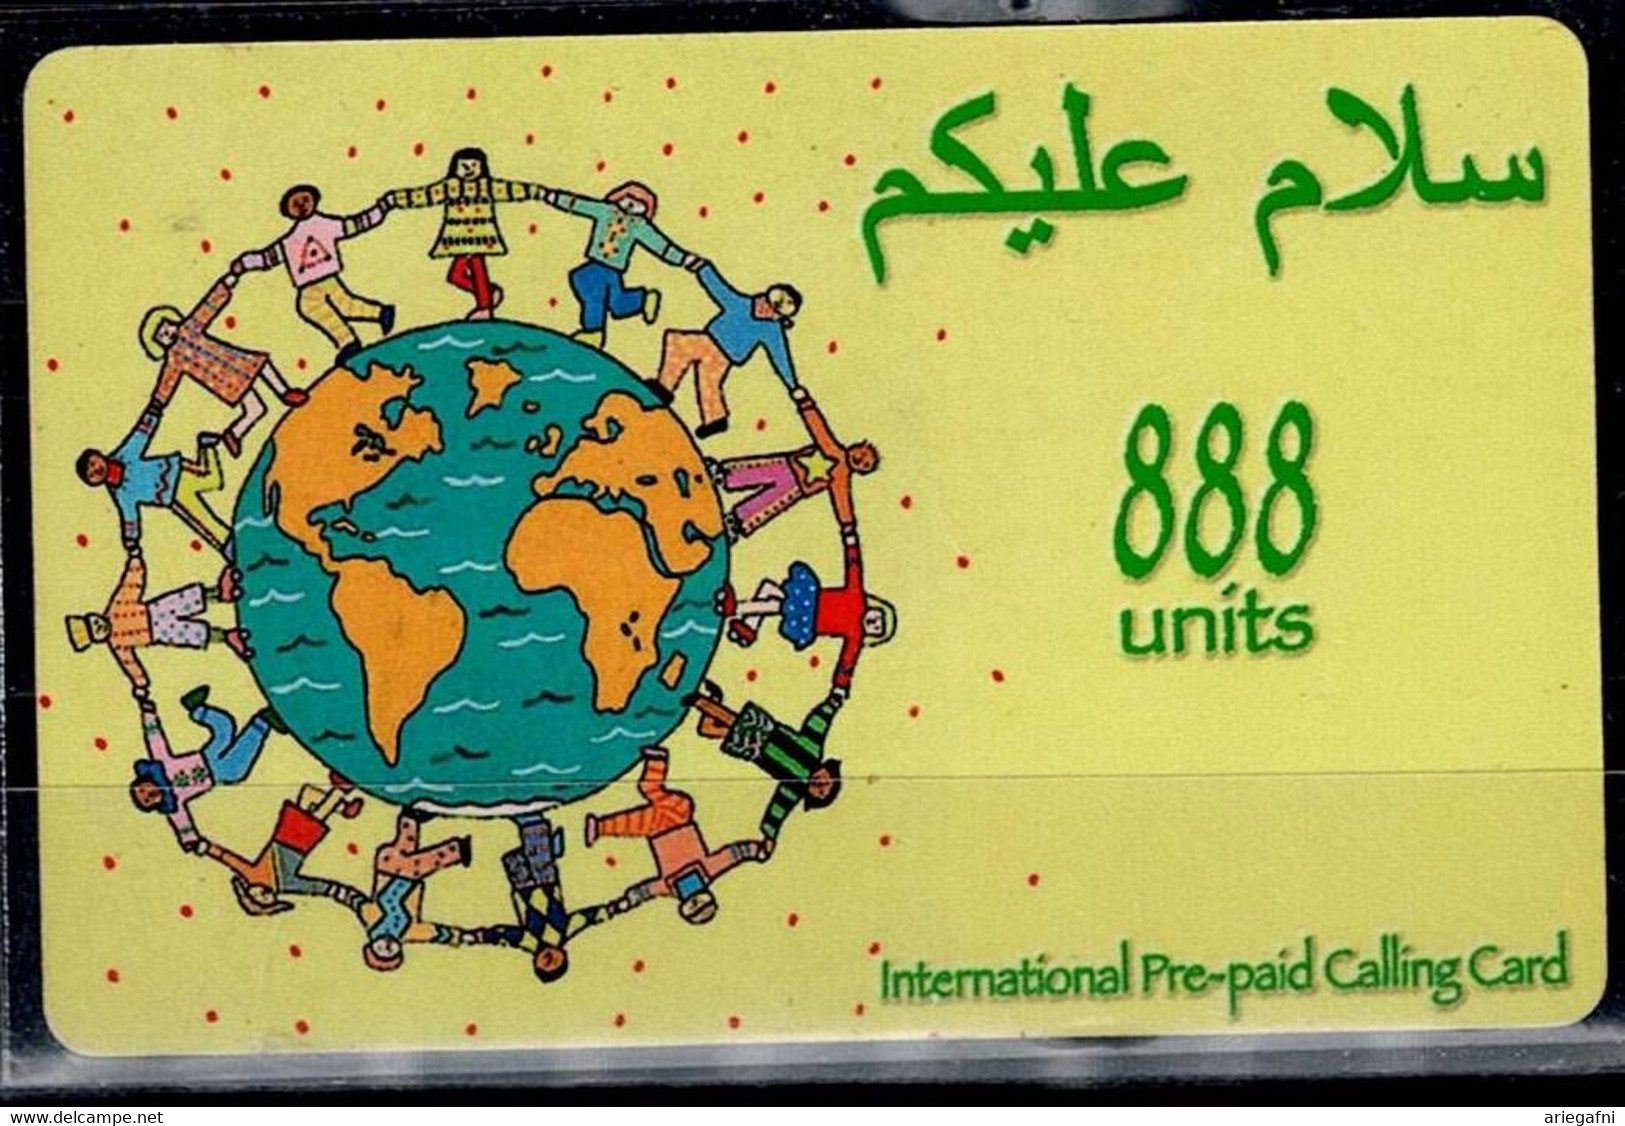 PALESTINE 2011 018 PRIVATE INTERNATIONAL PRE PAID CALLING CARD 888 UNITS MINT VF!! - Palestine